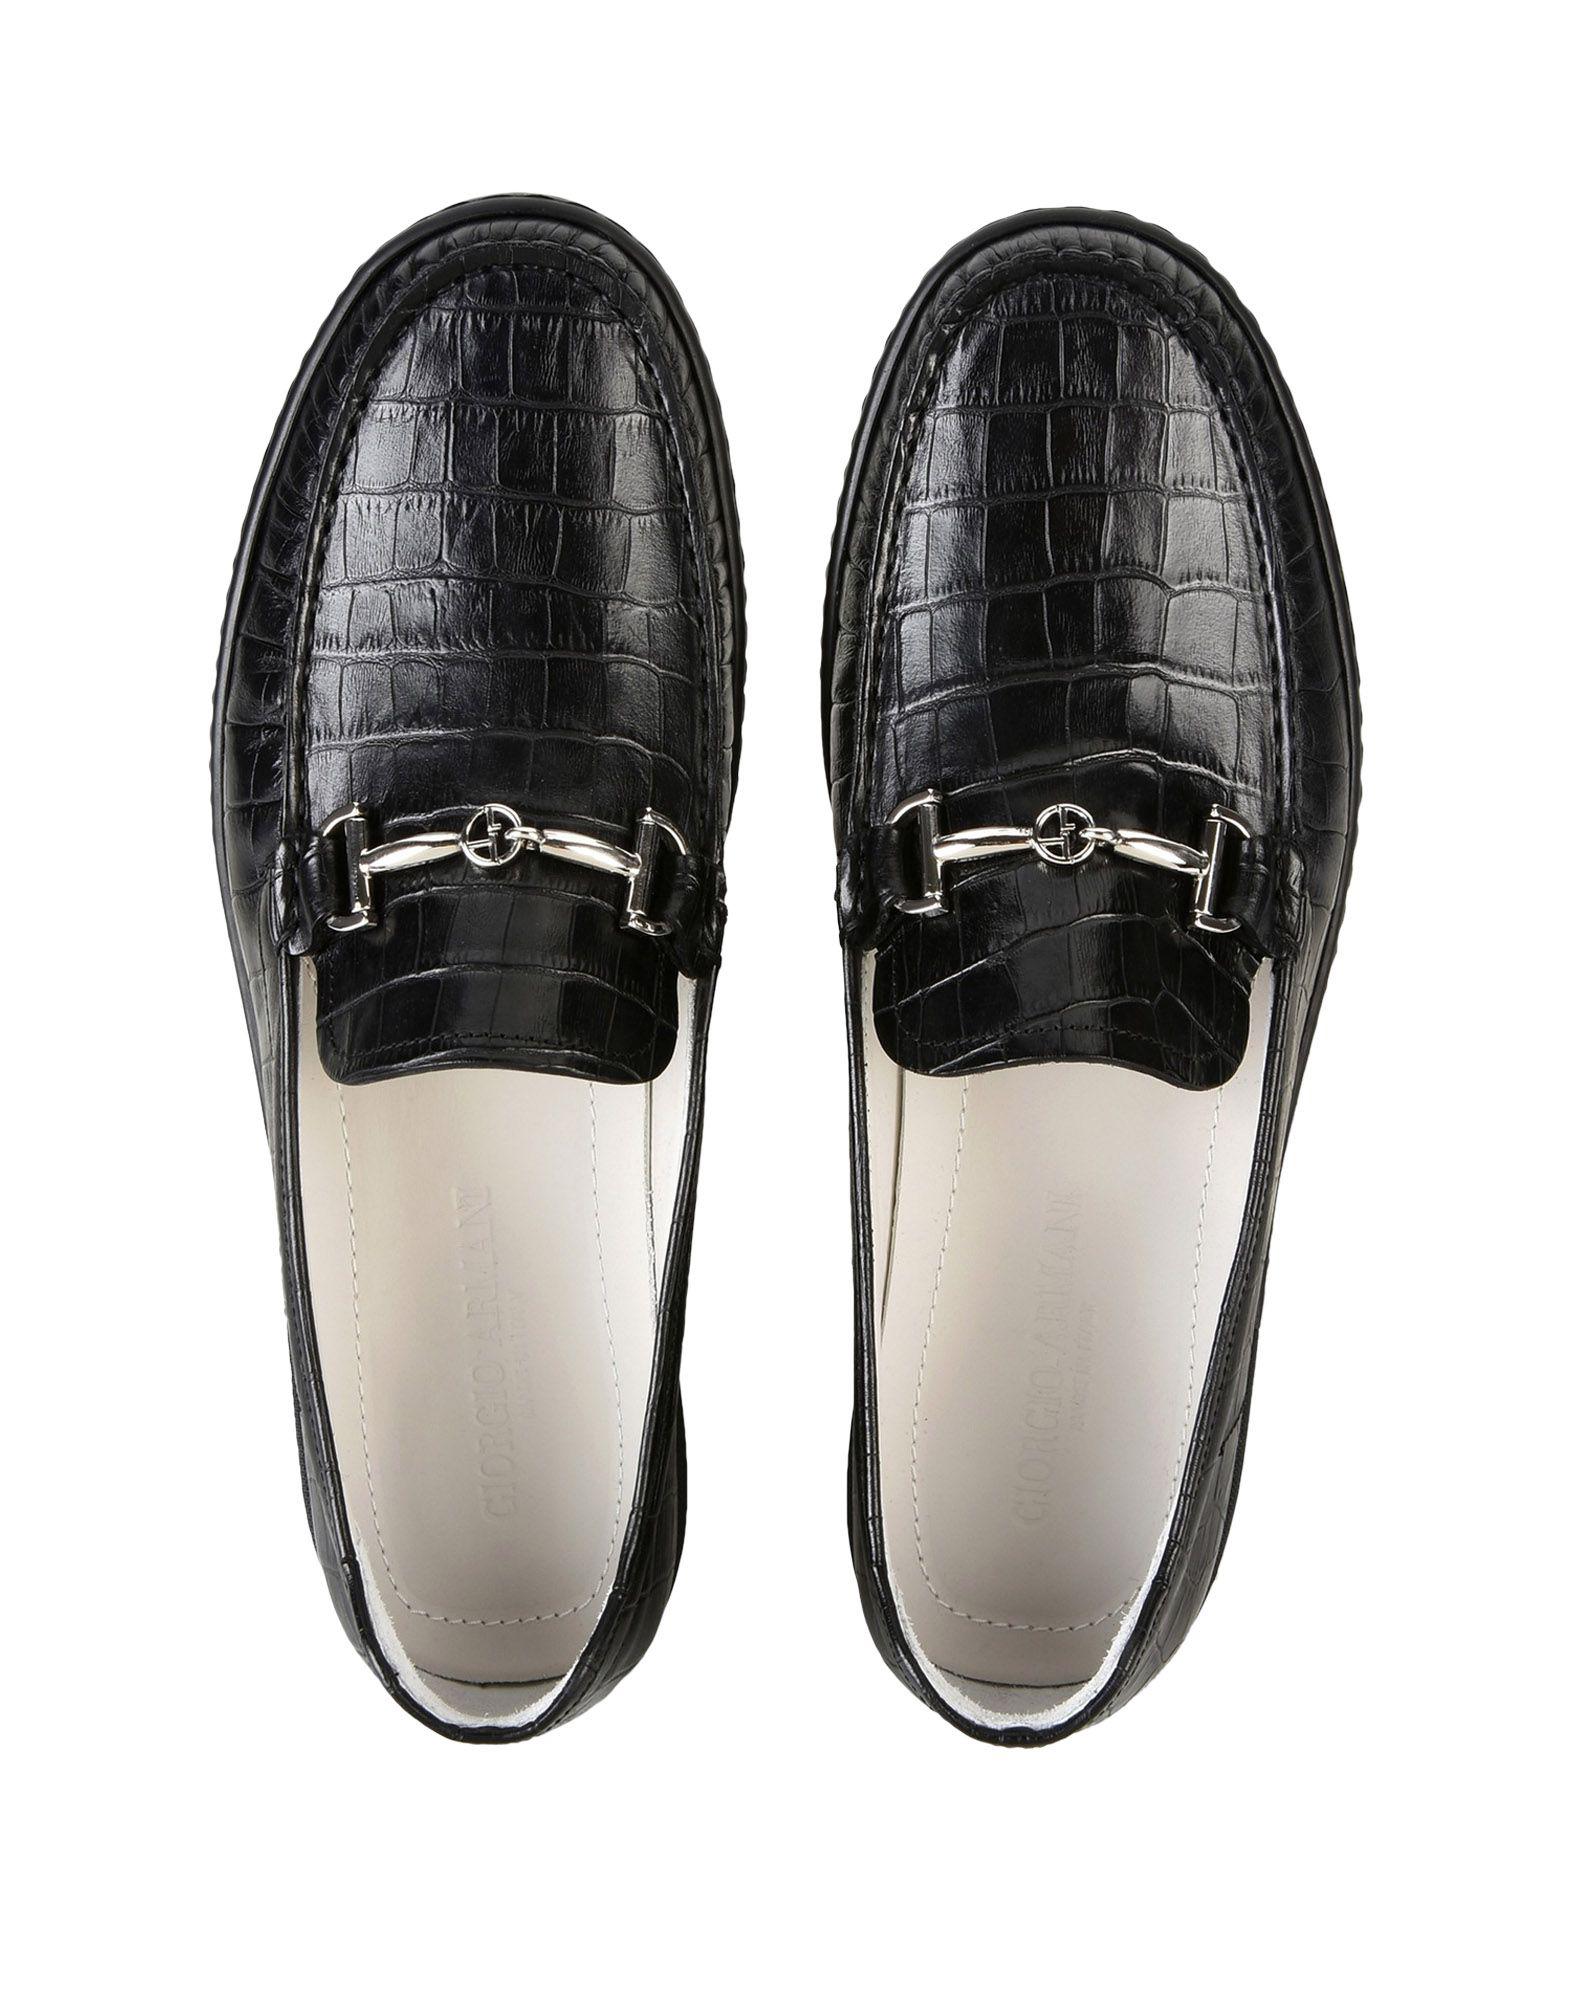 Giorgio Armani Leather Loafer in Black for Men - Lyst